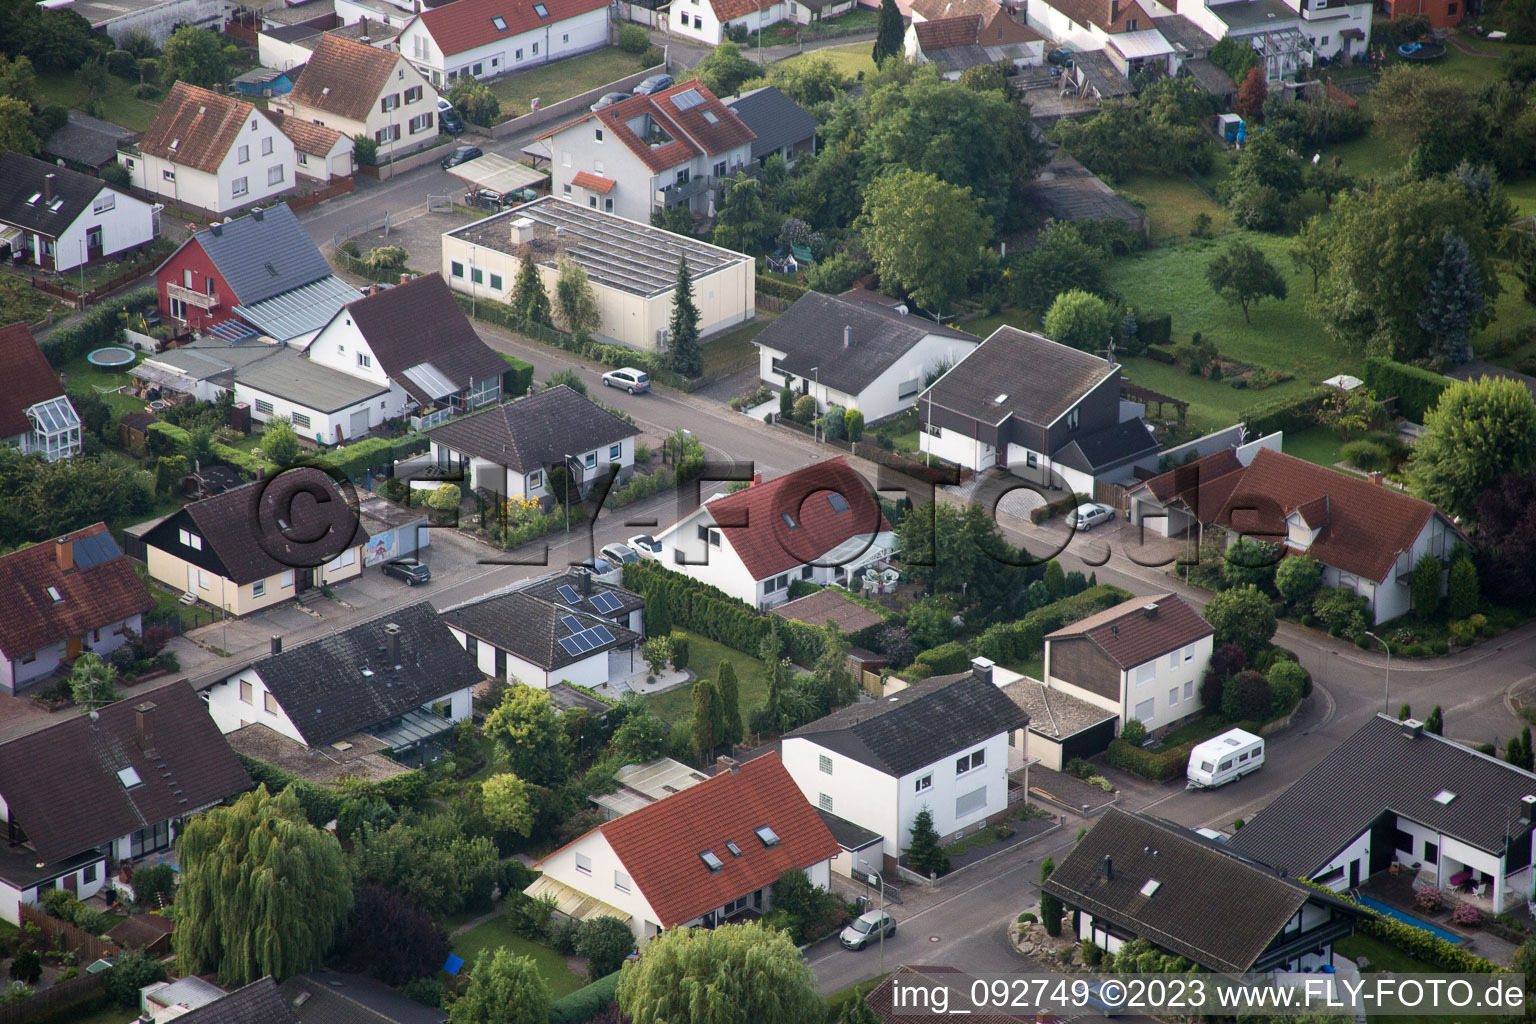 Maxburgstr à le quartier Billigheim in Billigheim-Ingenheim dans le département Rhénanie-Palatinat, Allemagne vue du ciel